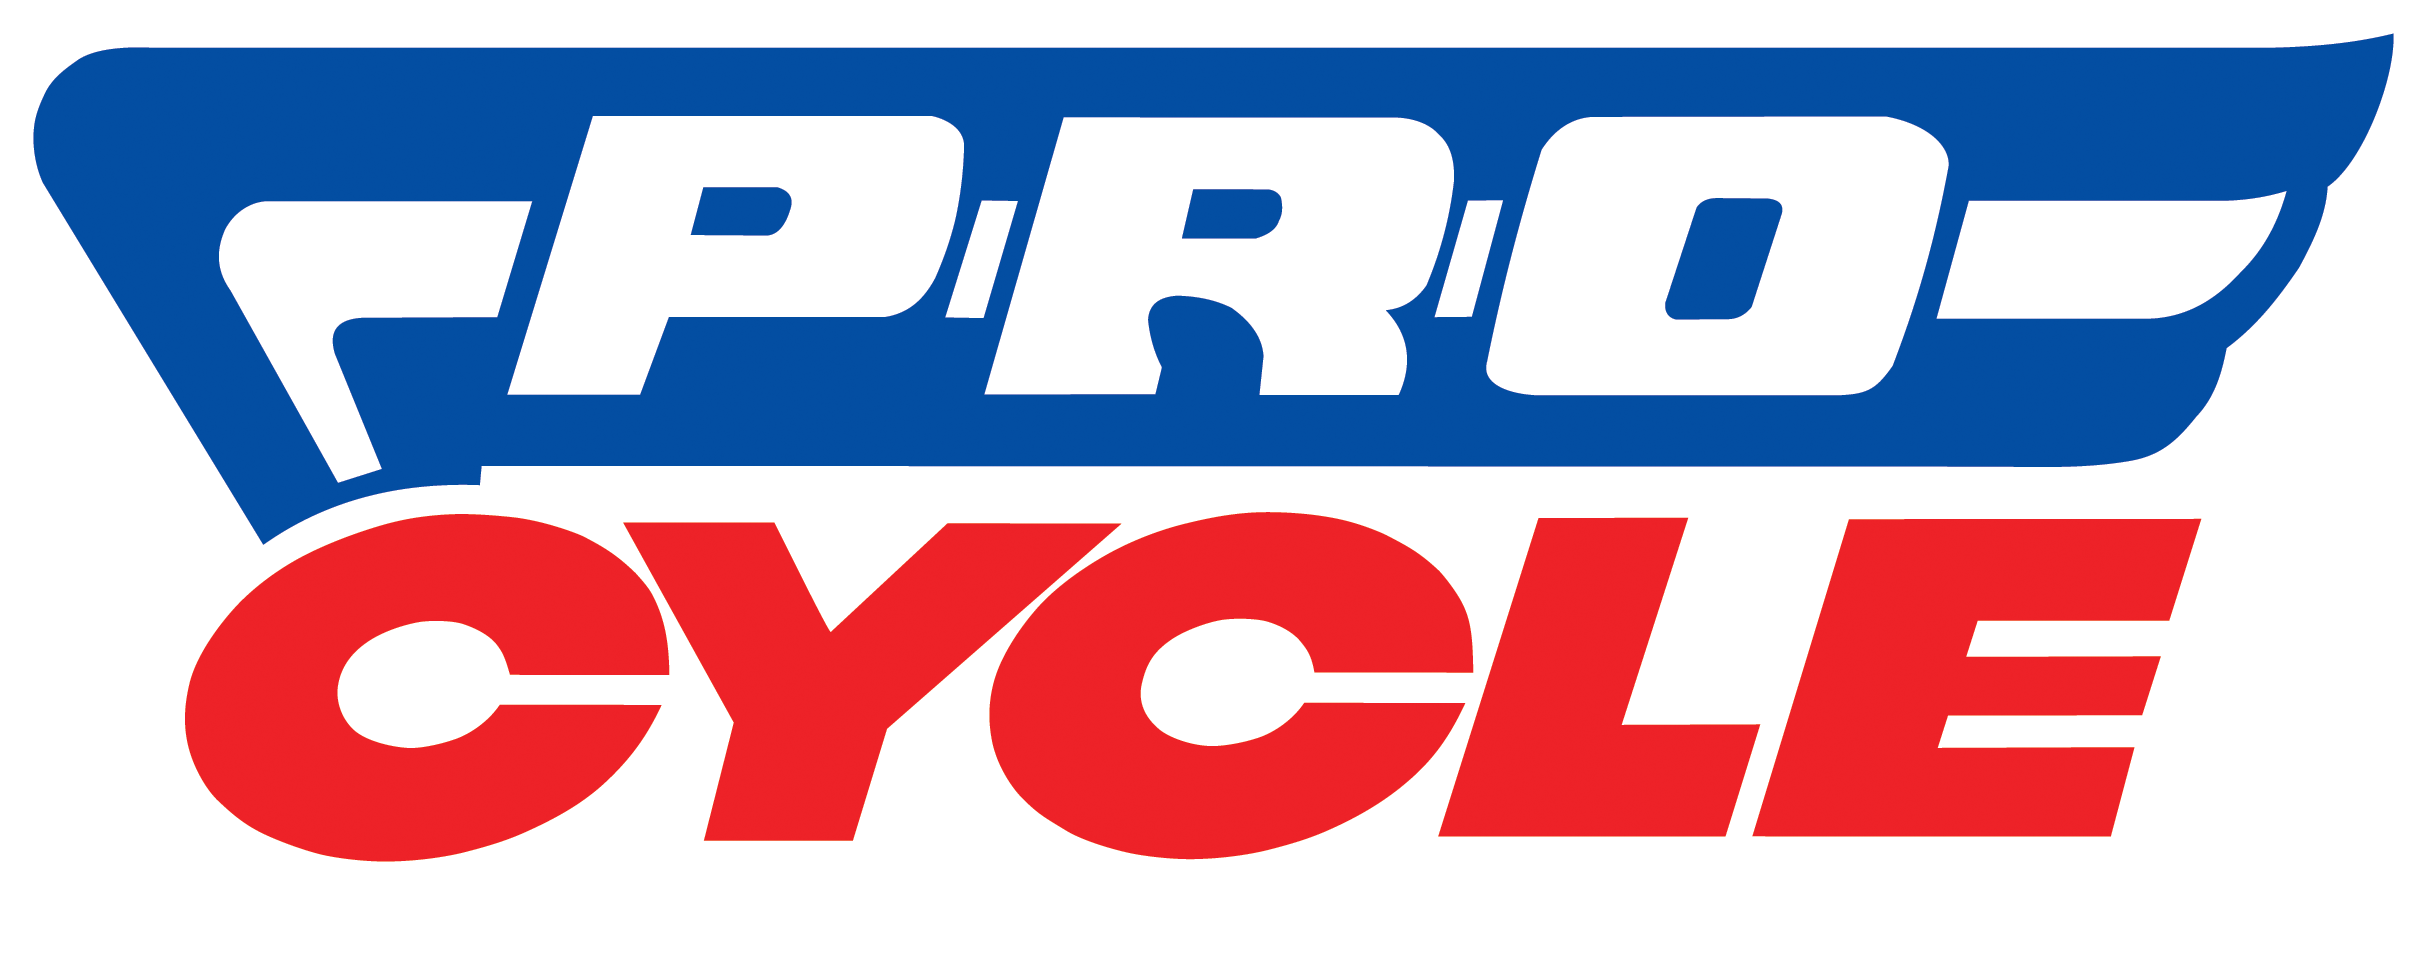 Pro Cycle logo